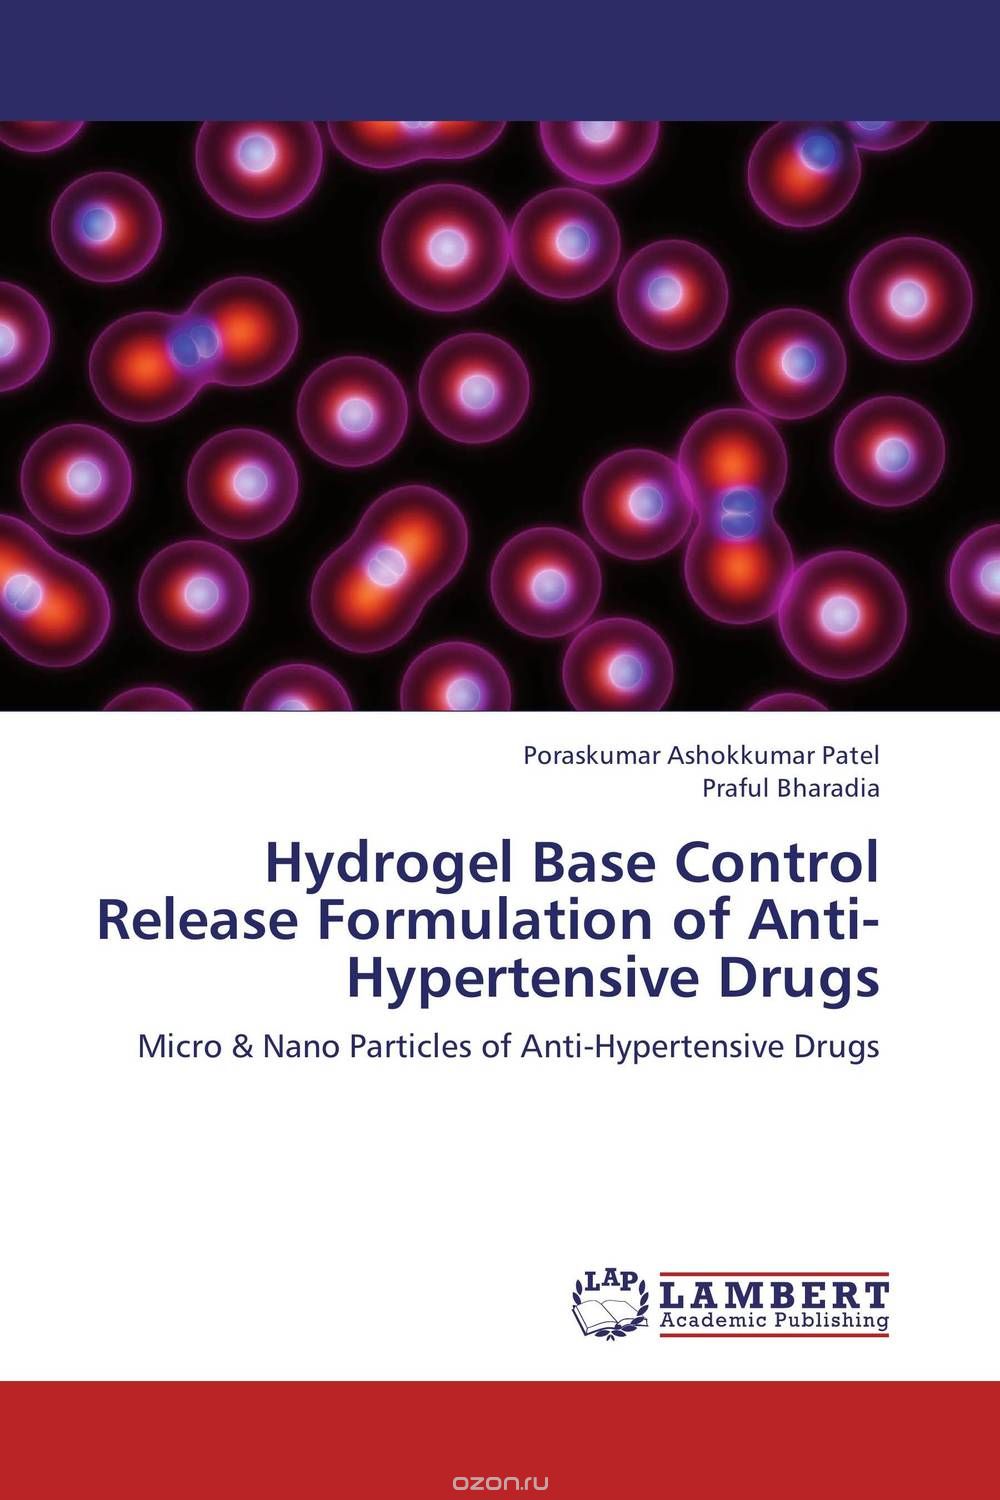 Hydrogel Base Control Release Formulation of Anti-Hypertensive Drugs